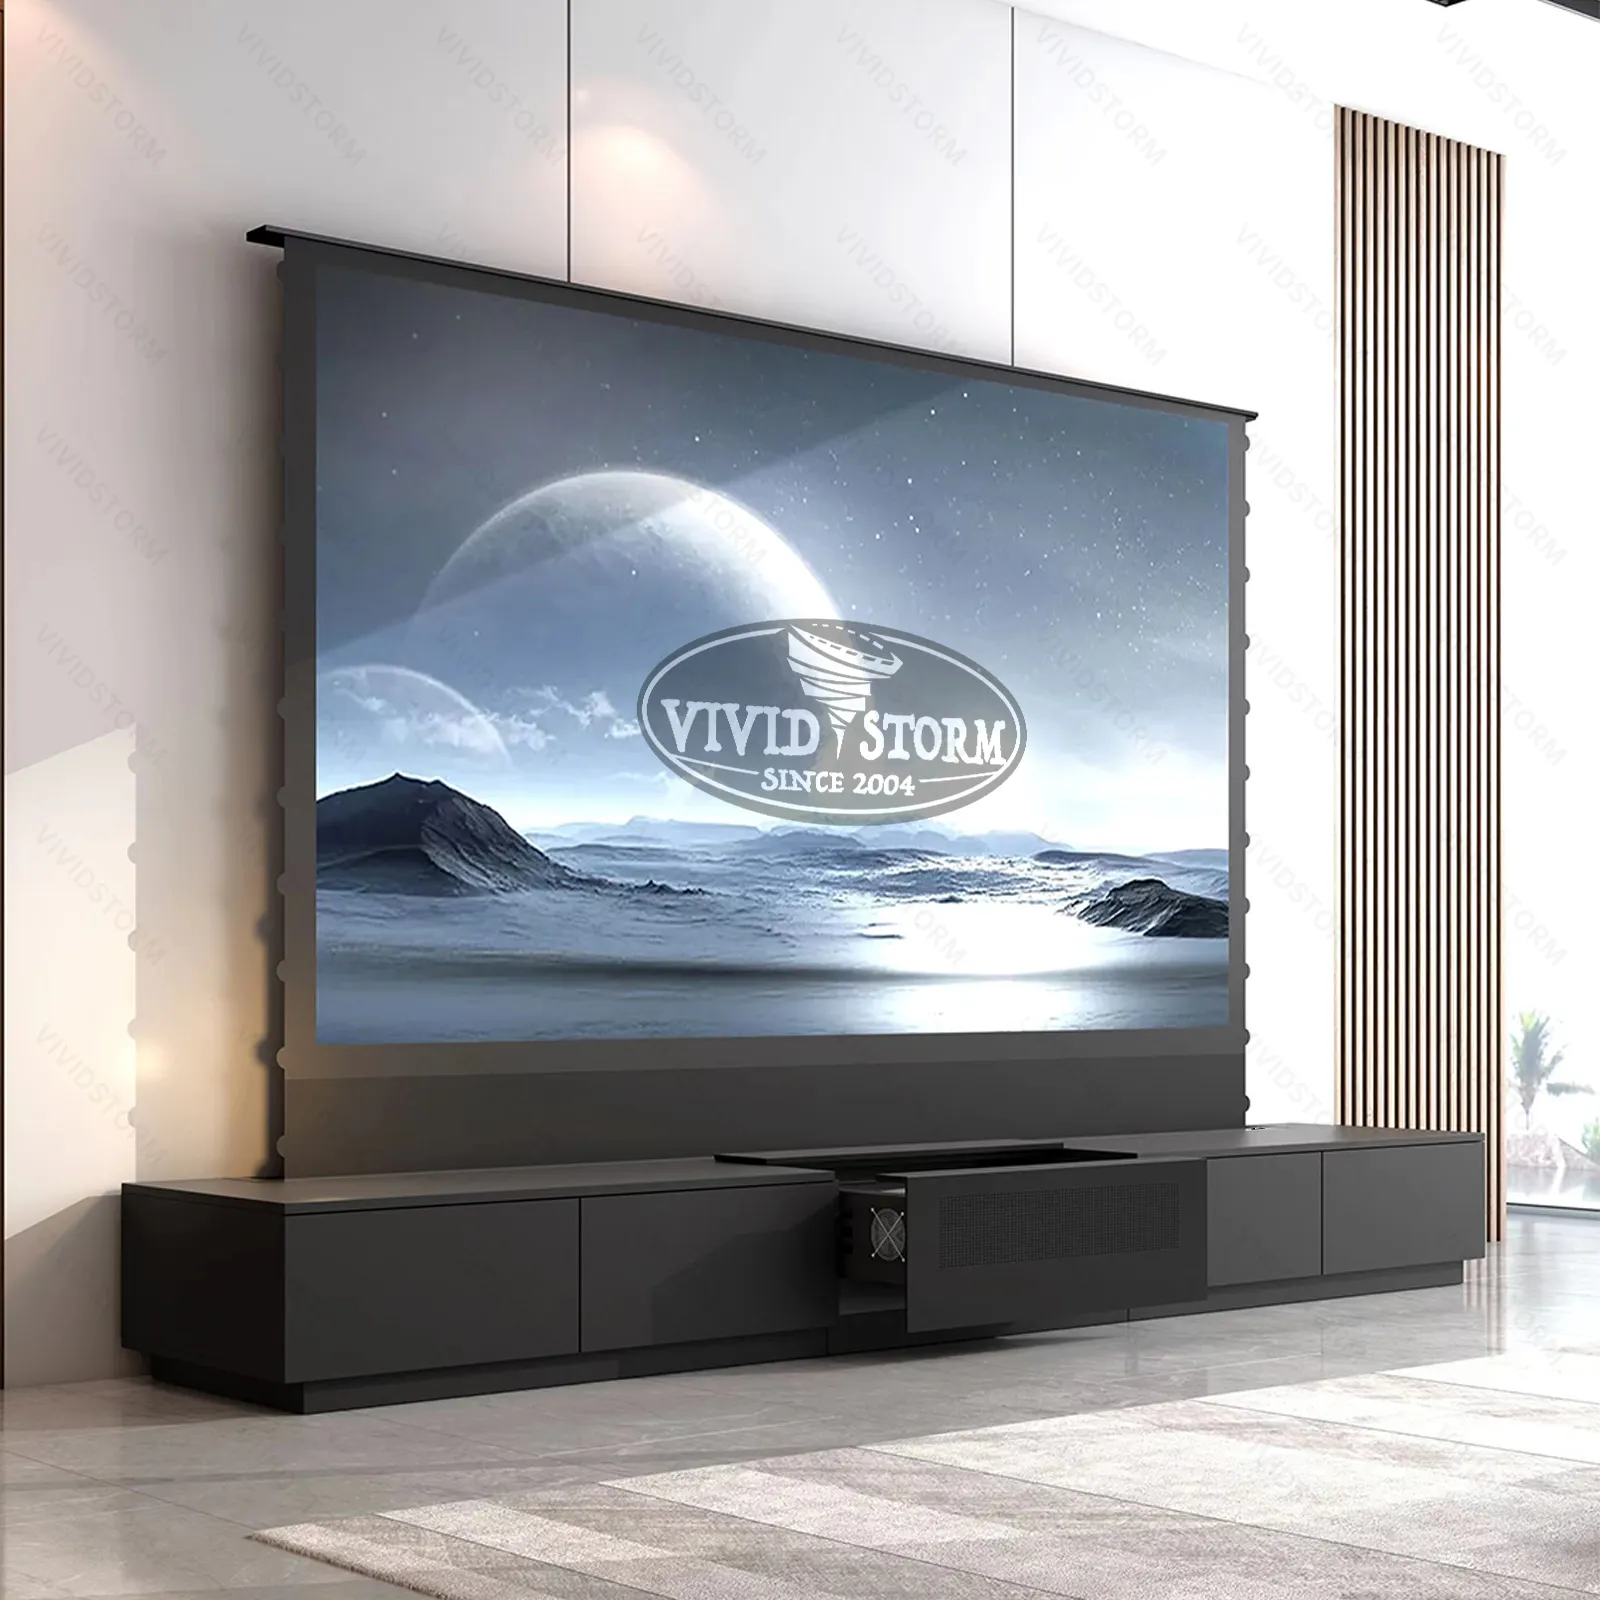 VIVIDSTORM ממונעים לייזר טלוויזיה ארון טלוויזיה עומד הקרנת מסך משולב ארון לכל אוסט מקרן ארון